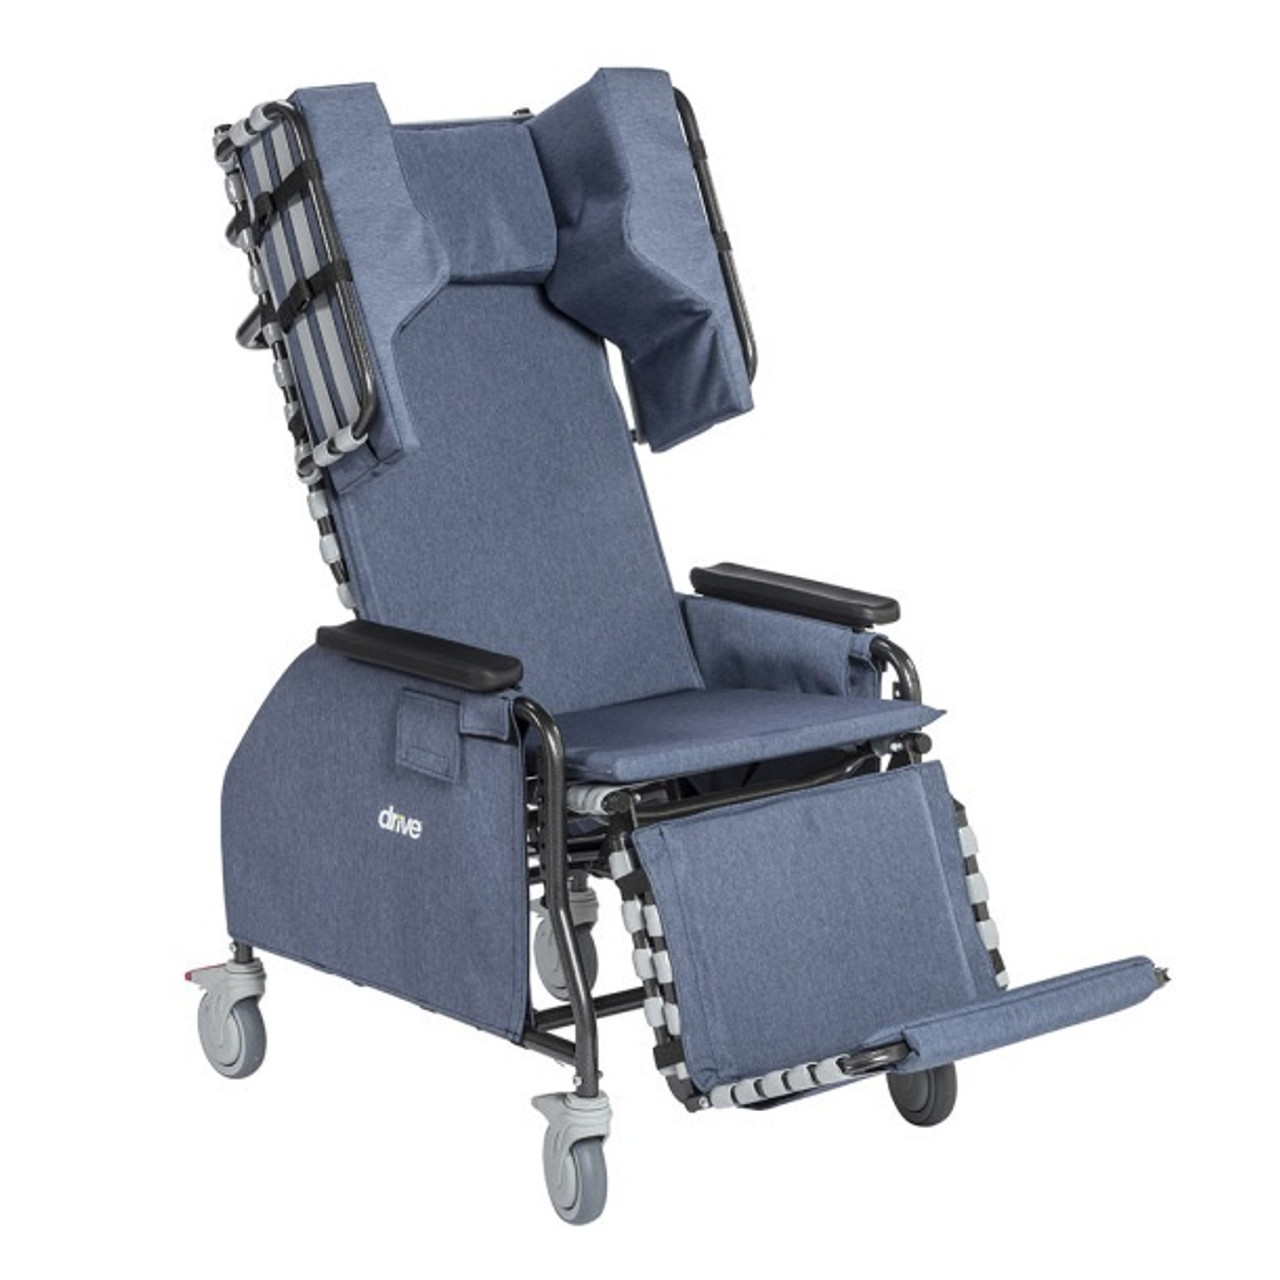  Skil-Care Geri Chair Comfort Seat Cushion - 20 x 18